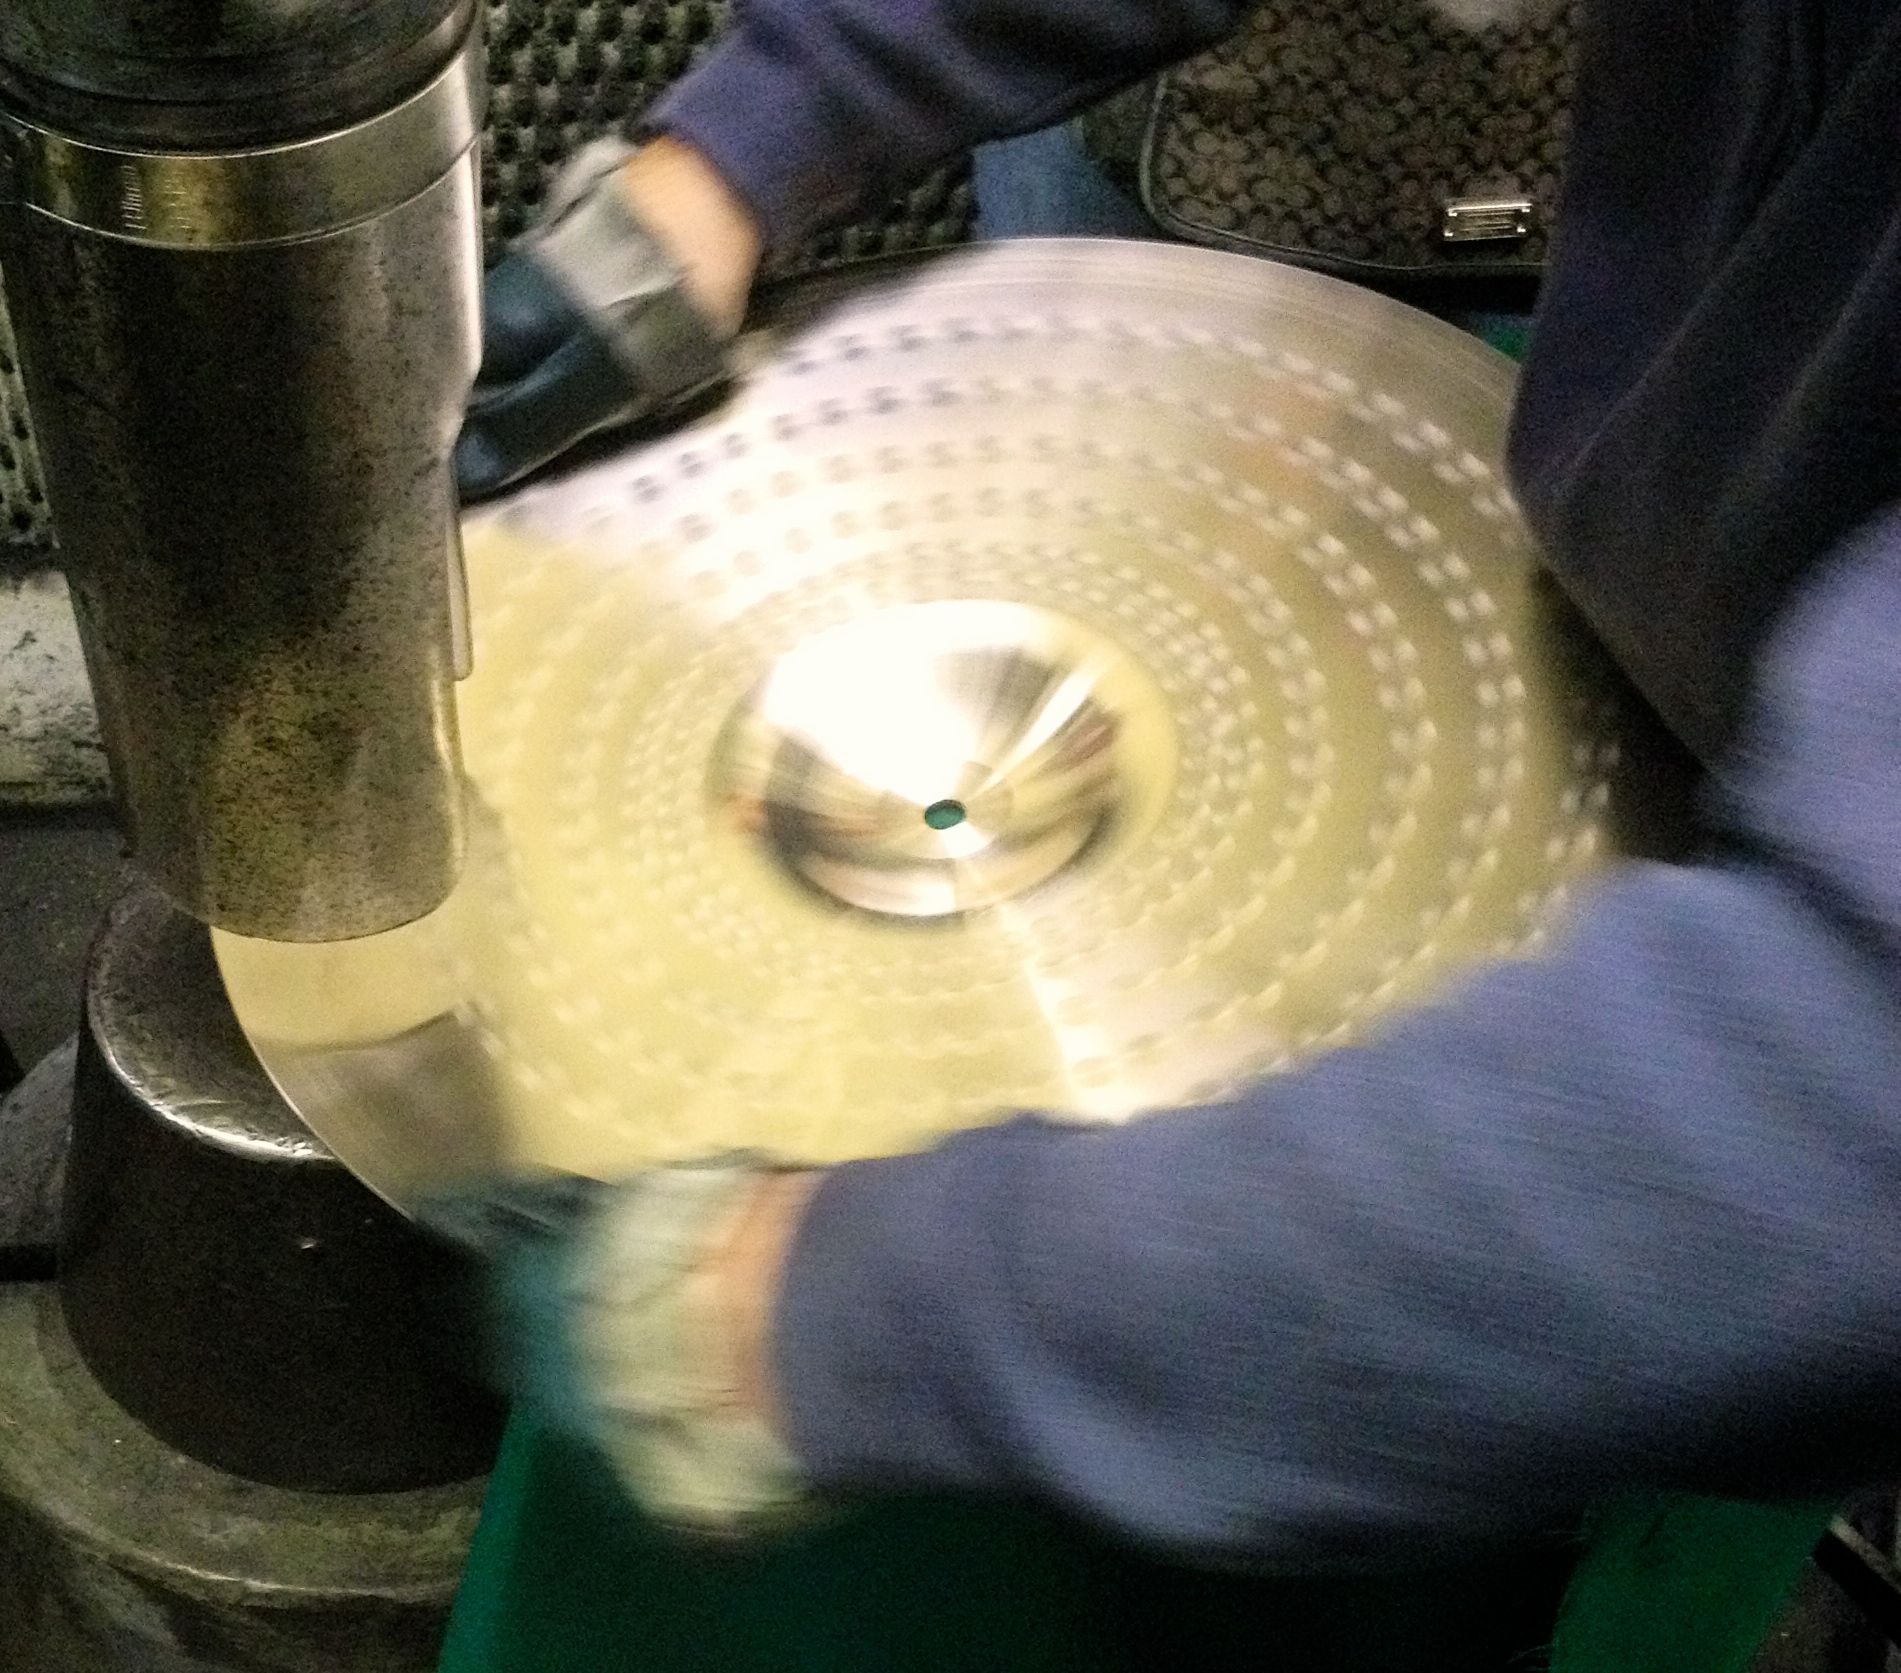 Cymbals hammering